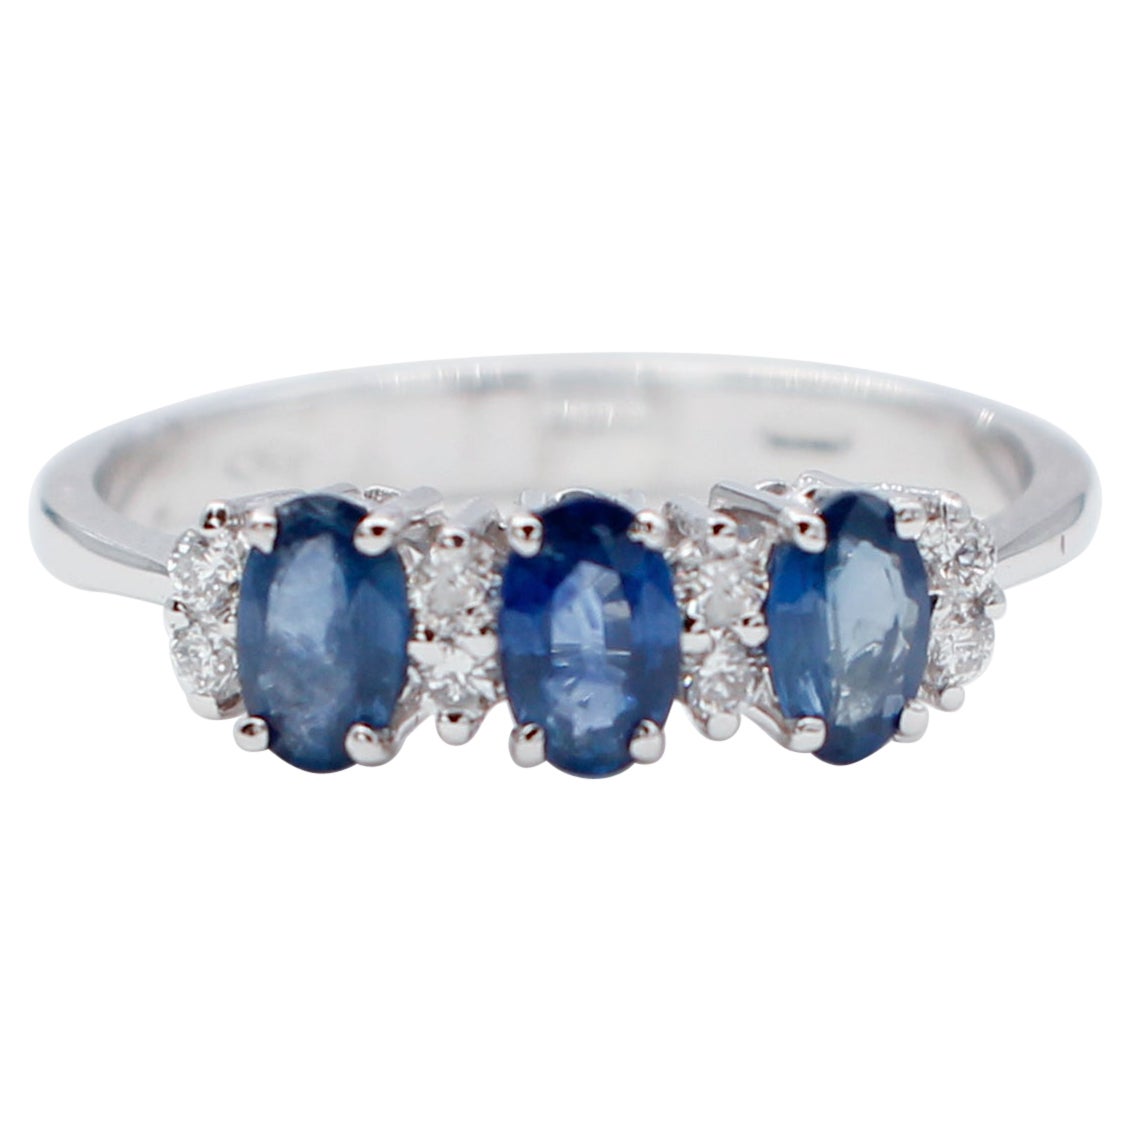 Blue Sapphires, White Diamonds, 18 Karat White Gold Ring